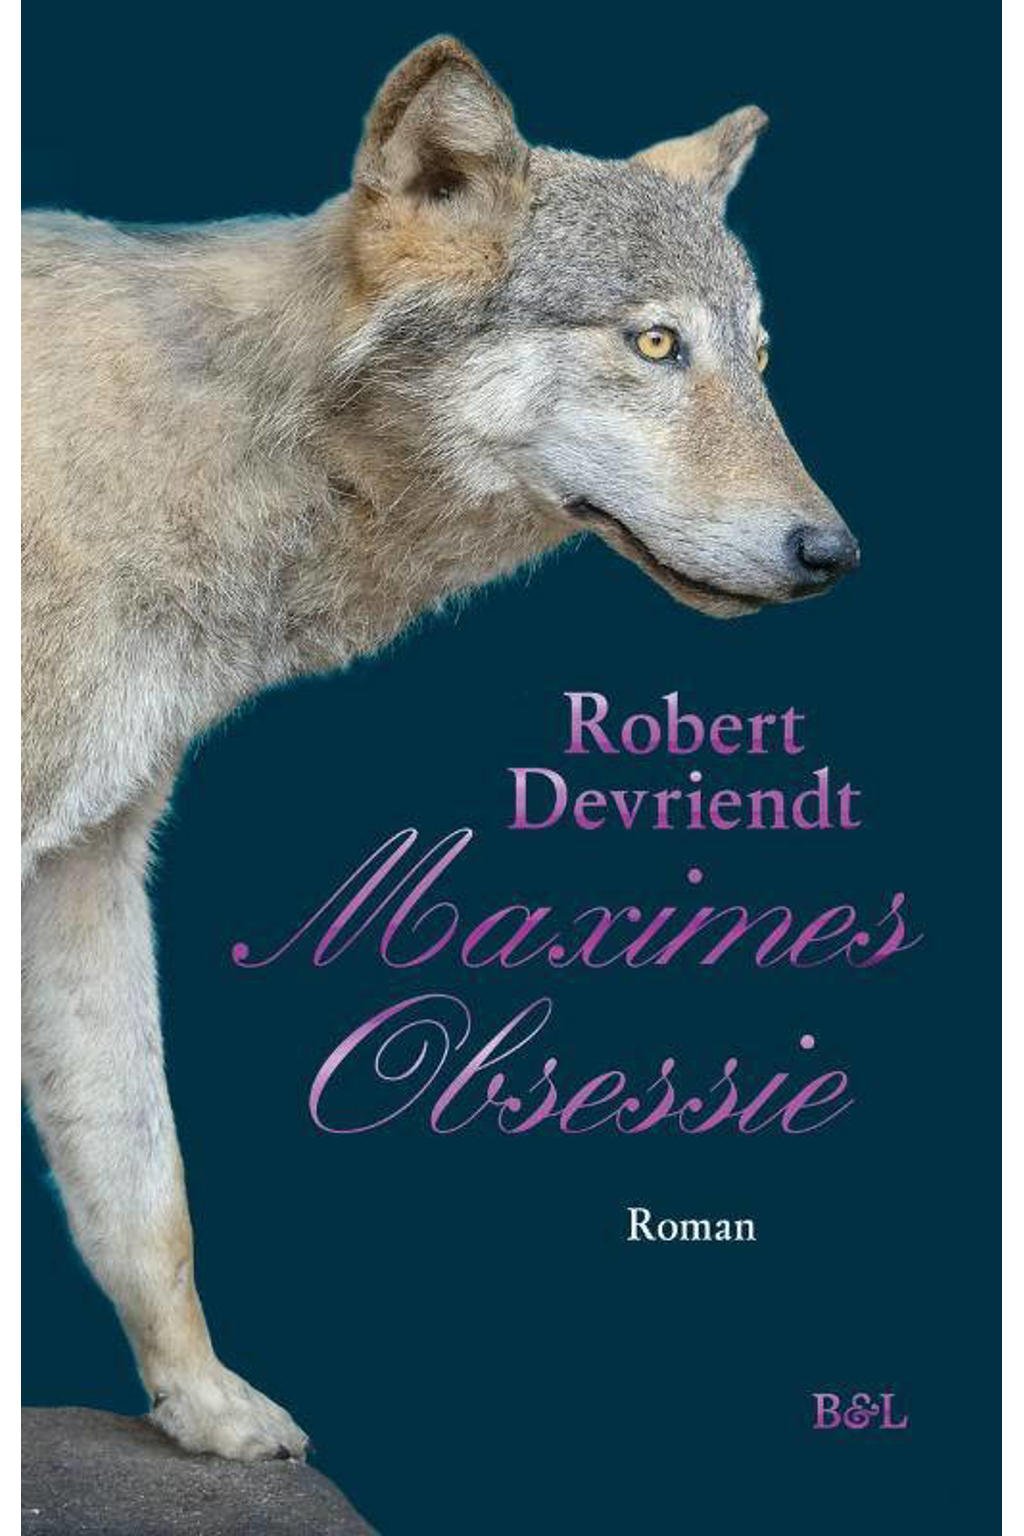 Maximes obsessie - Robert Devriendt